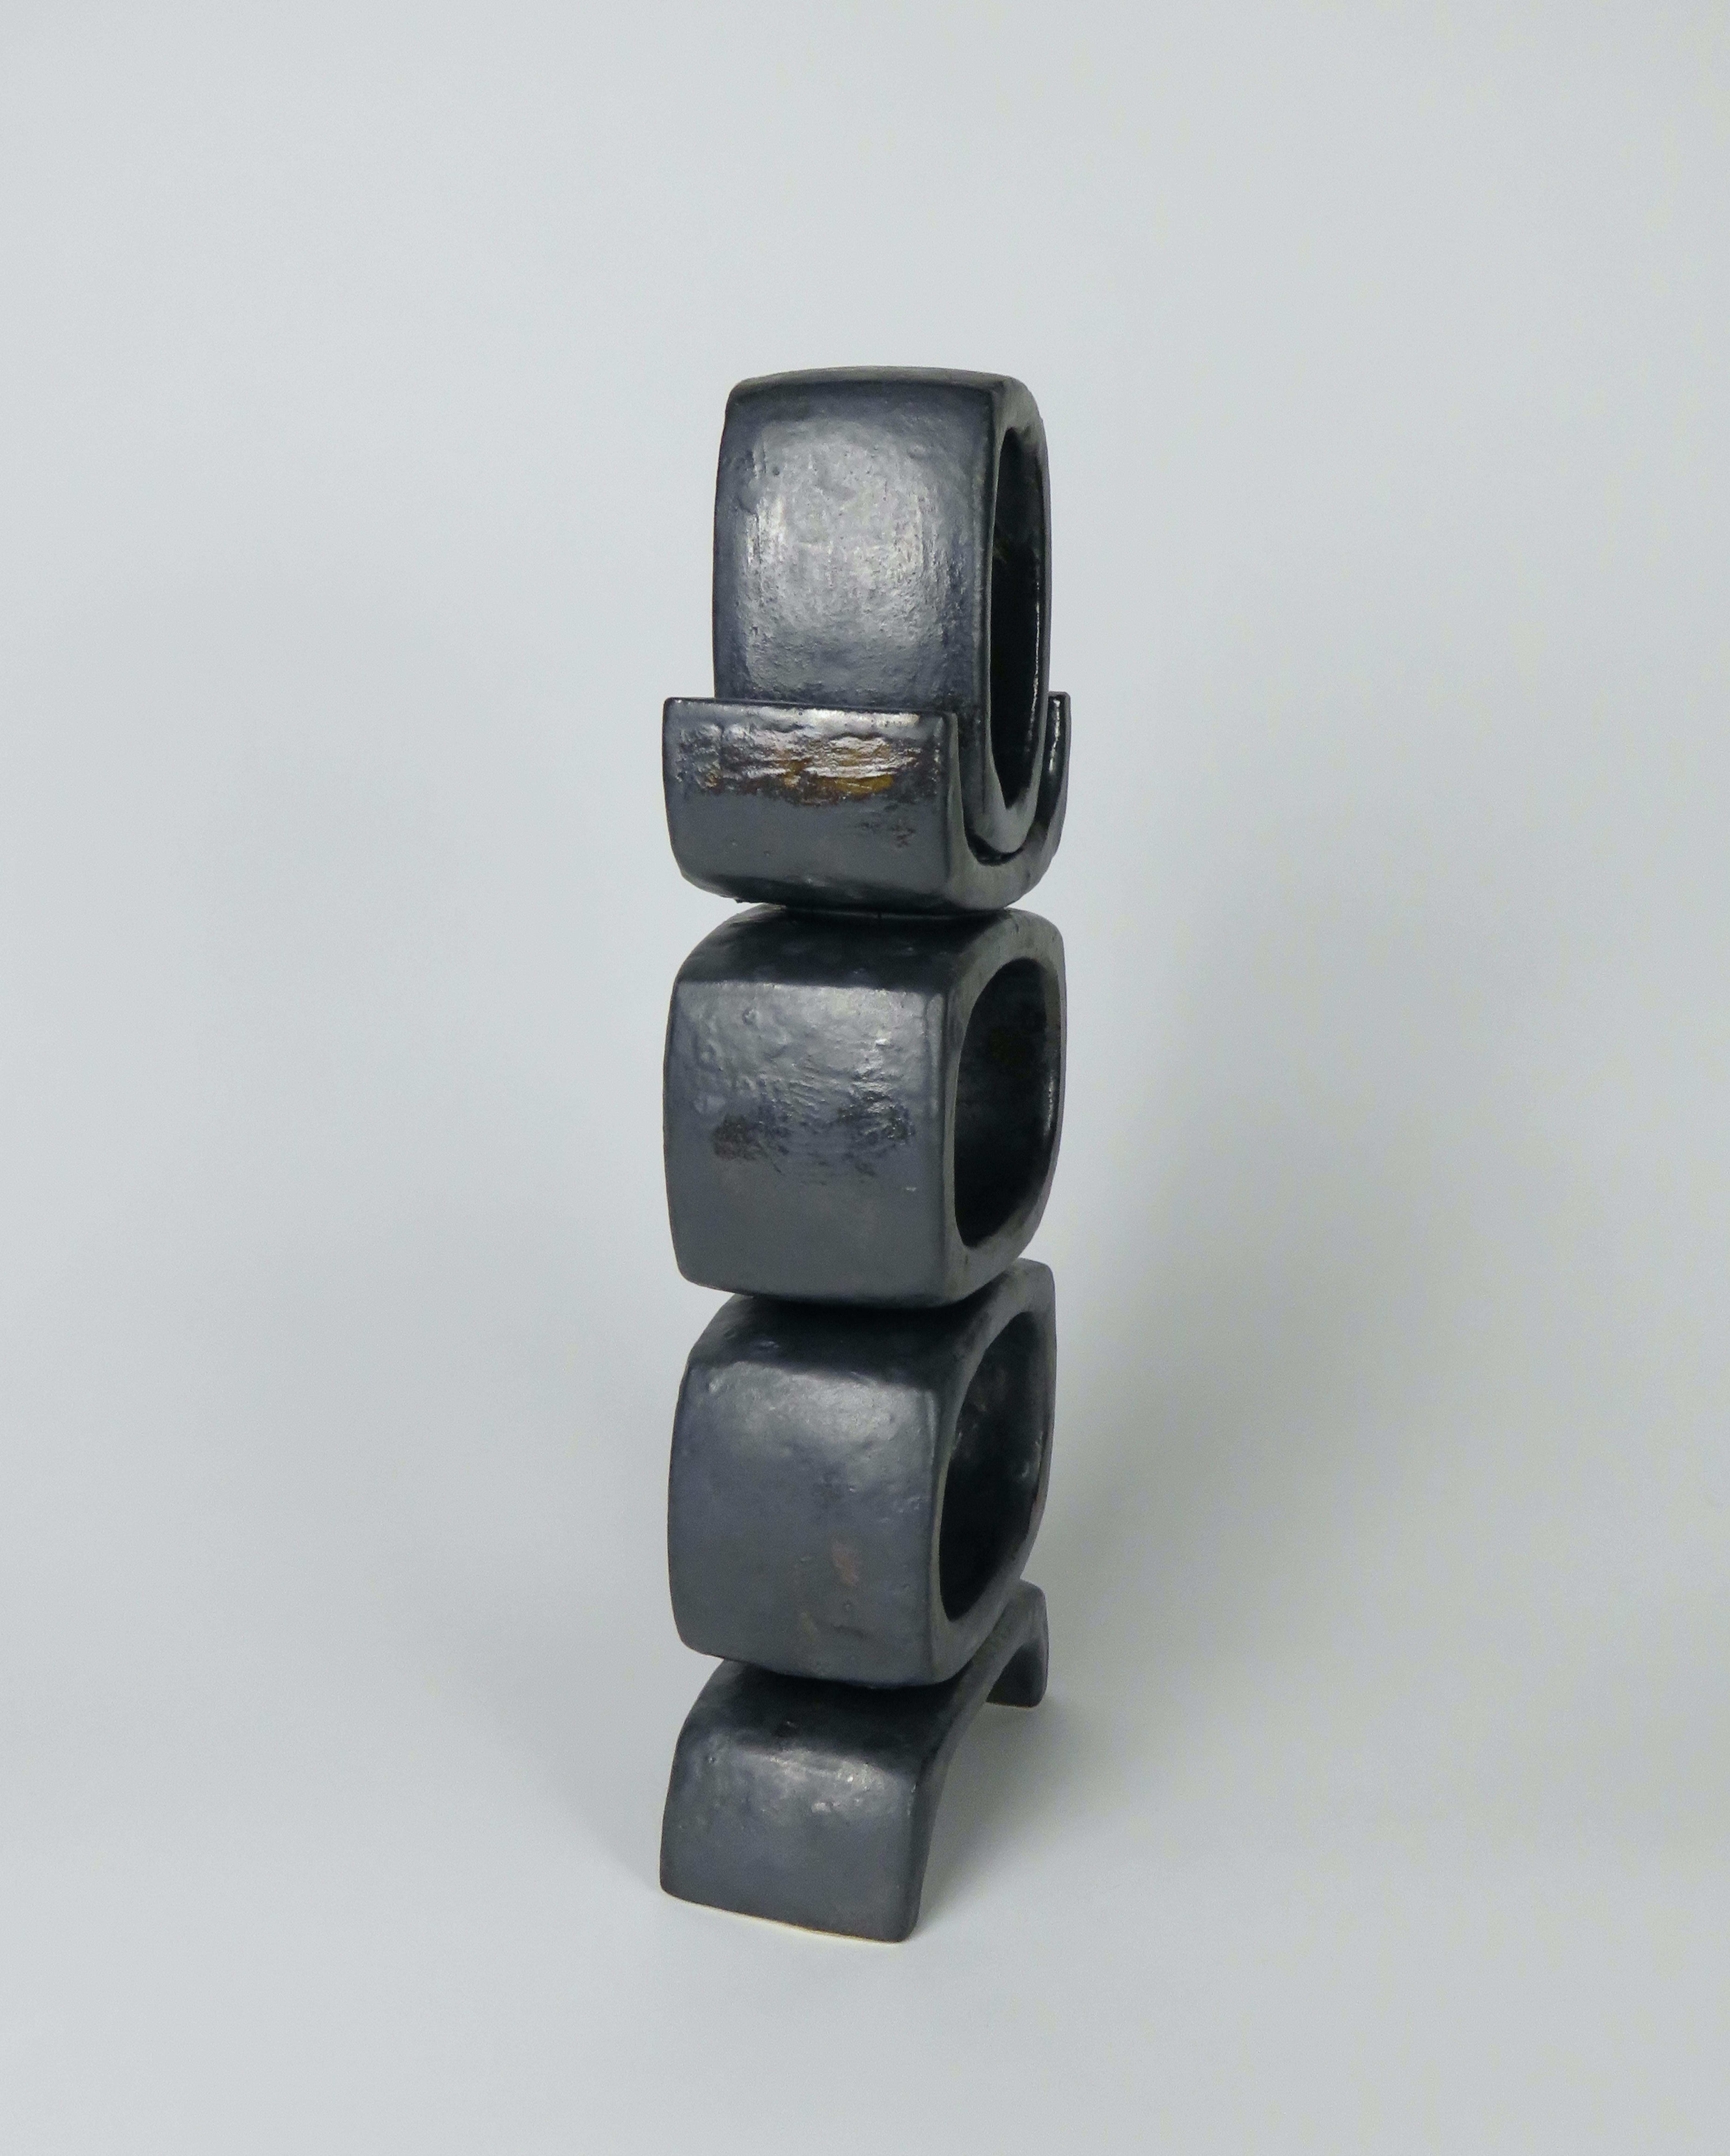 Ceramic 3 Rectangular Ovals, Short Angled Legs, Metallic Black-Glazed Clay Sculpture #1